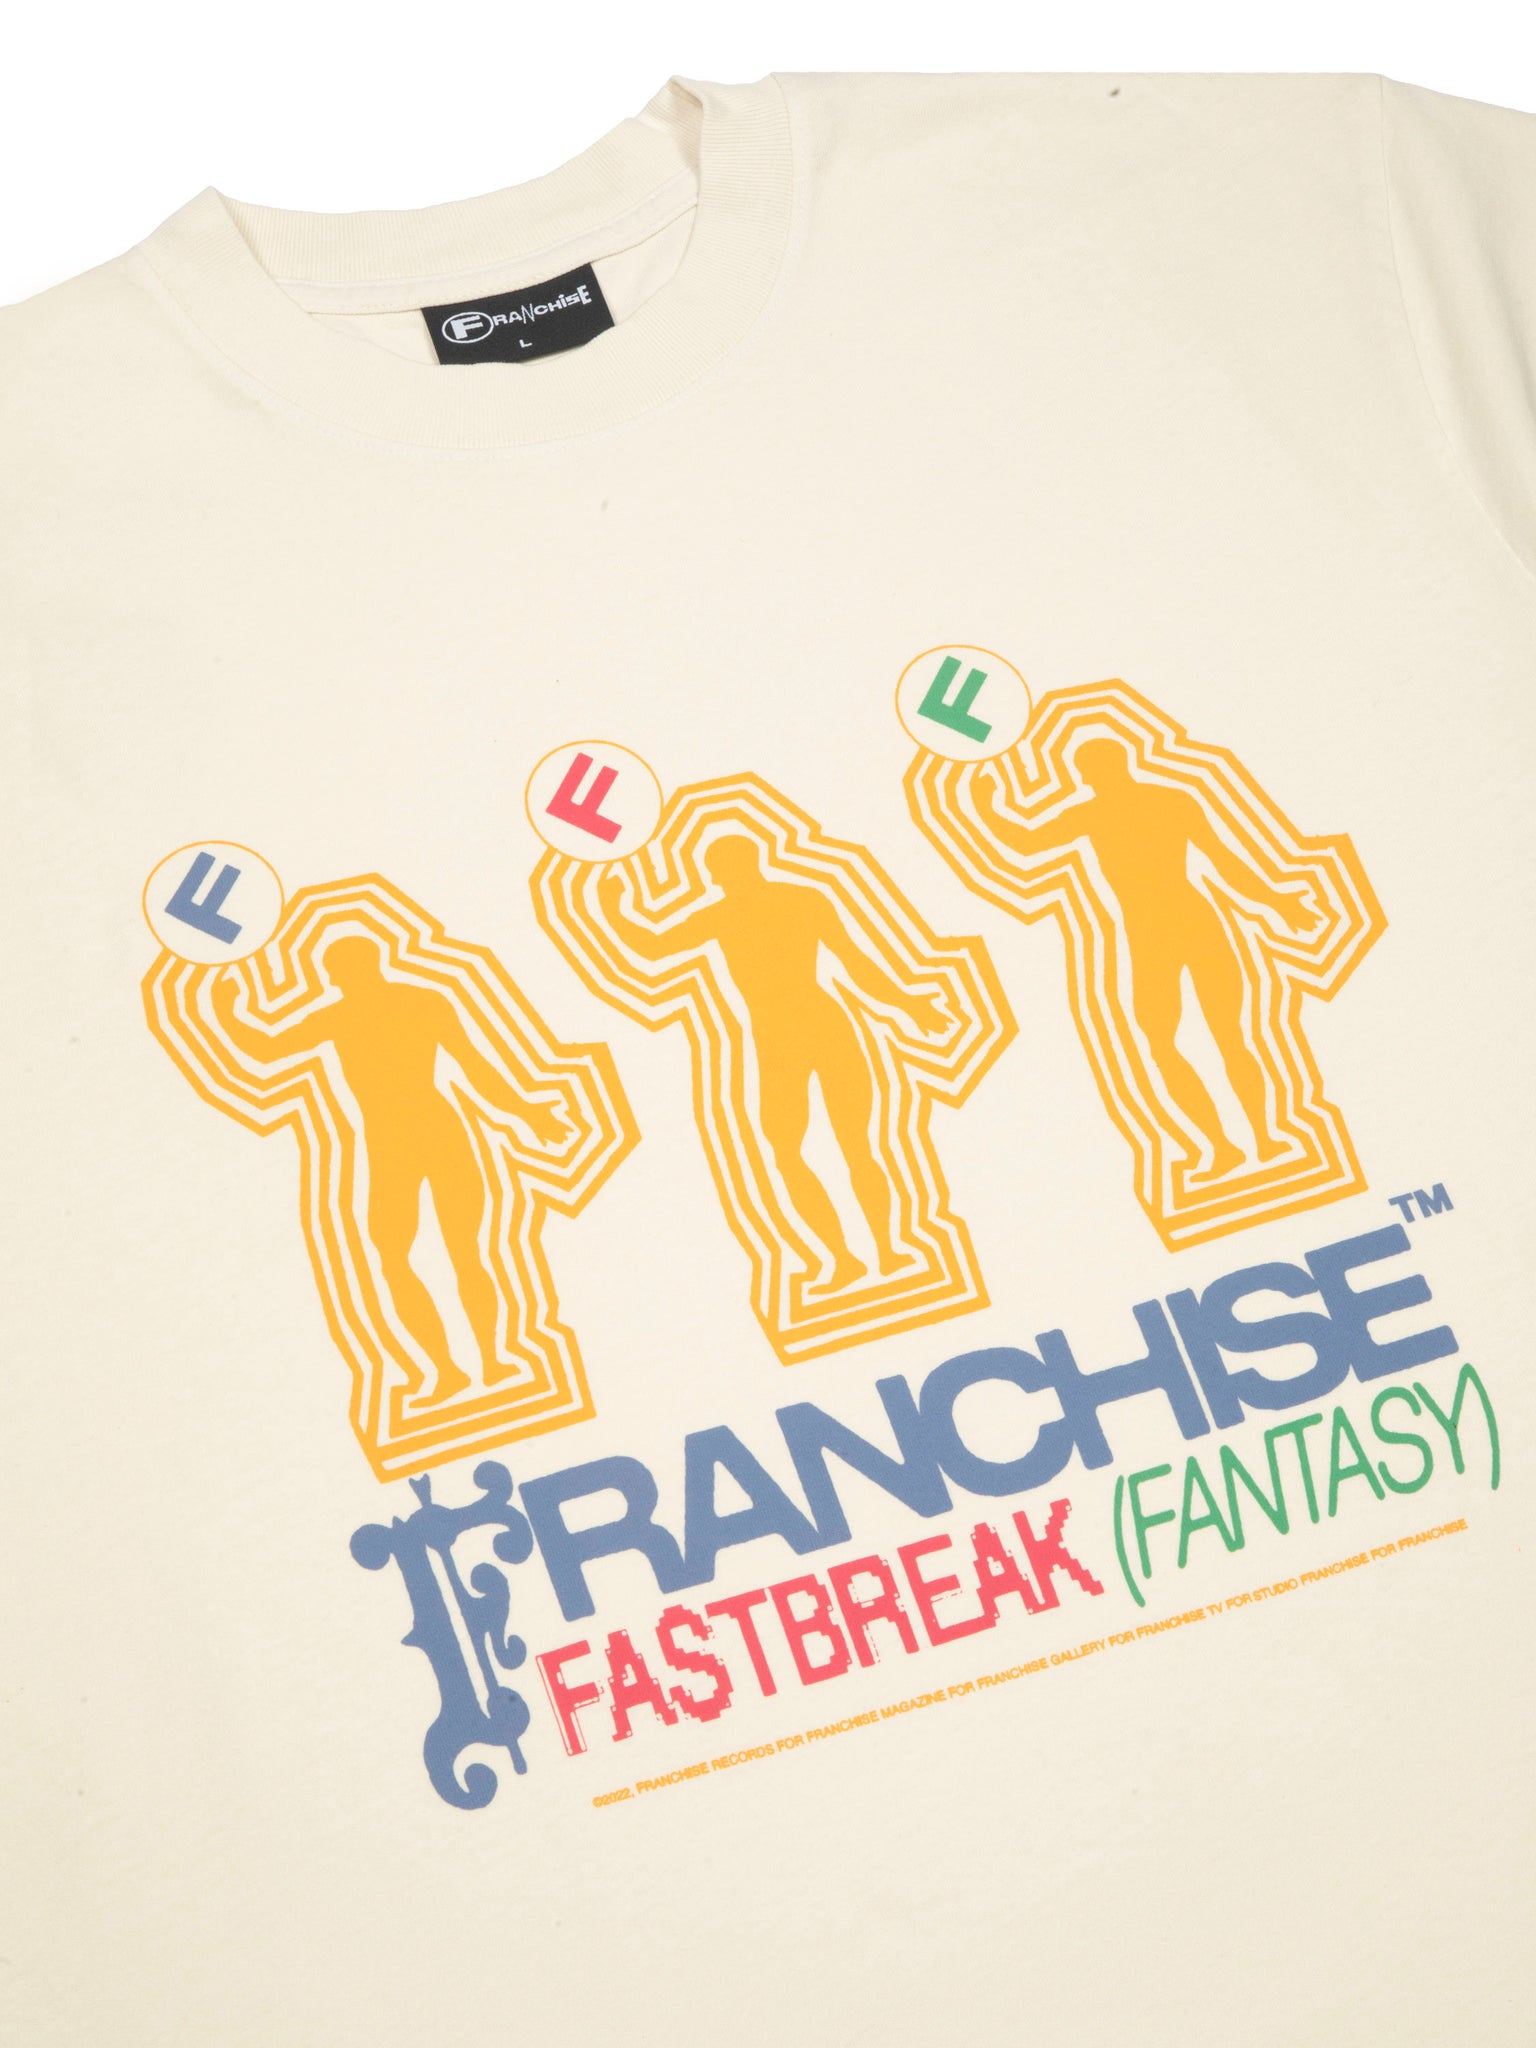 Fastbreak Fantasy T-Shirt